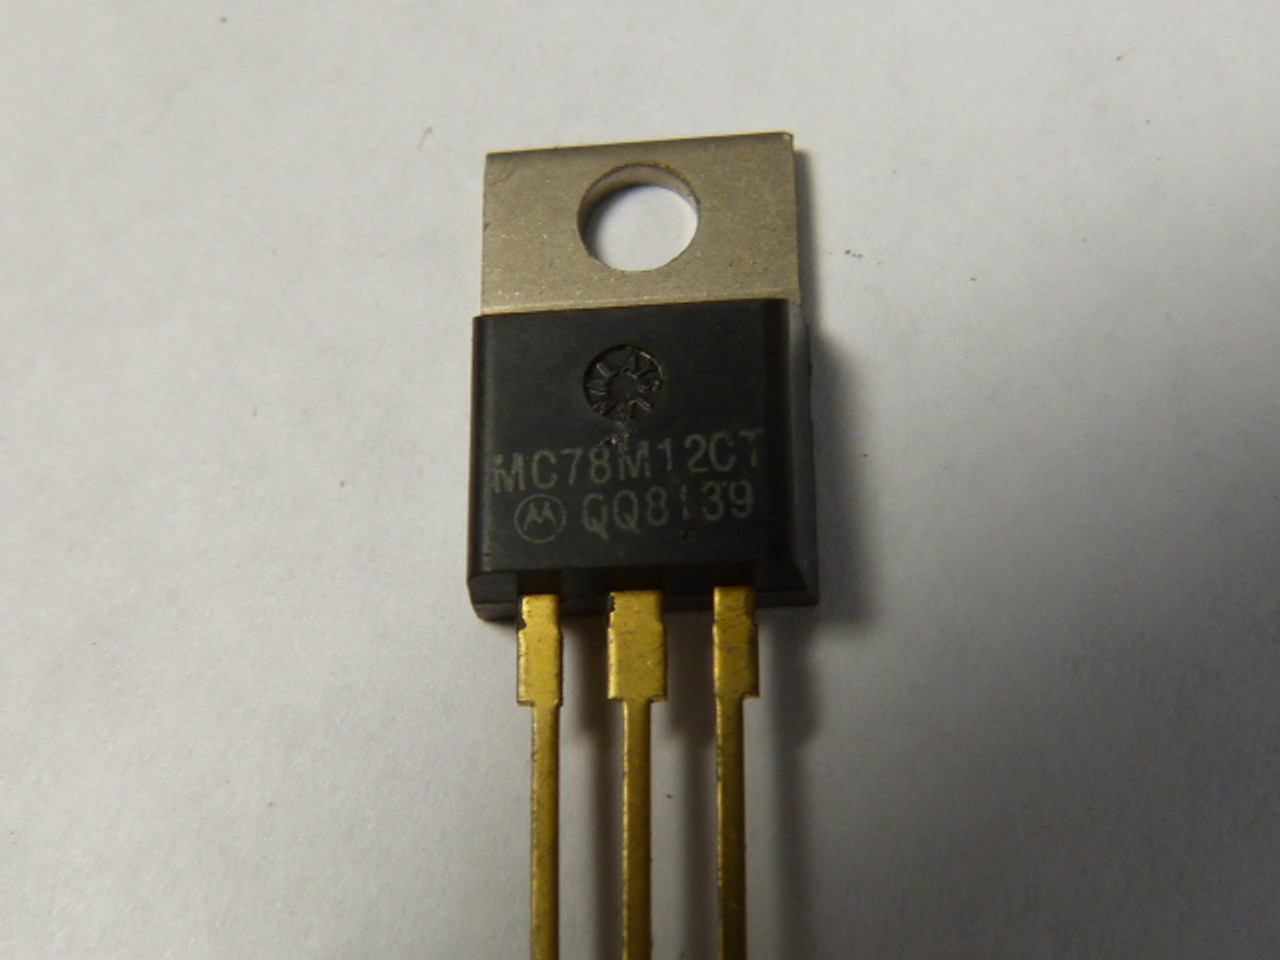 Motorola MC78M12CT Voltage Regulator NOP